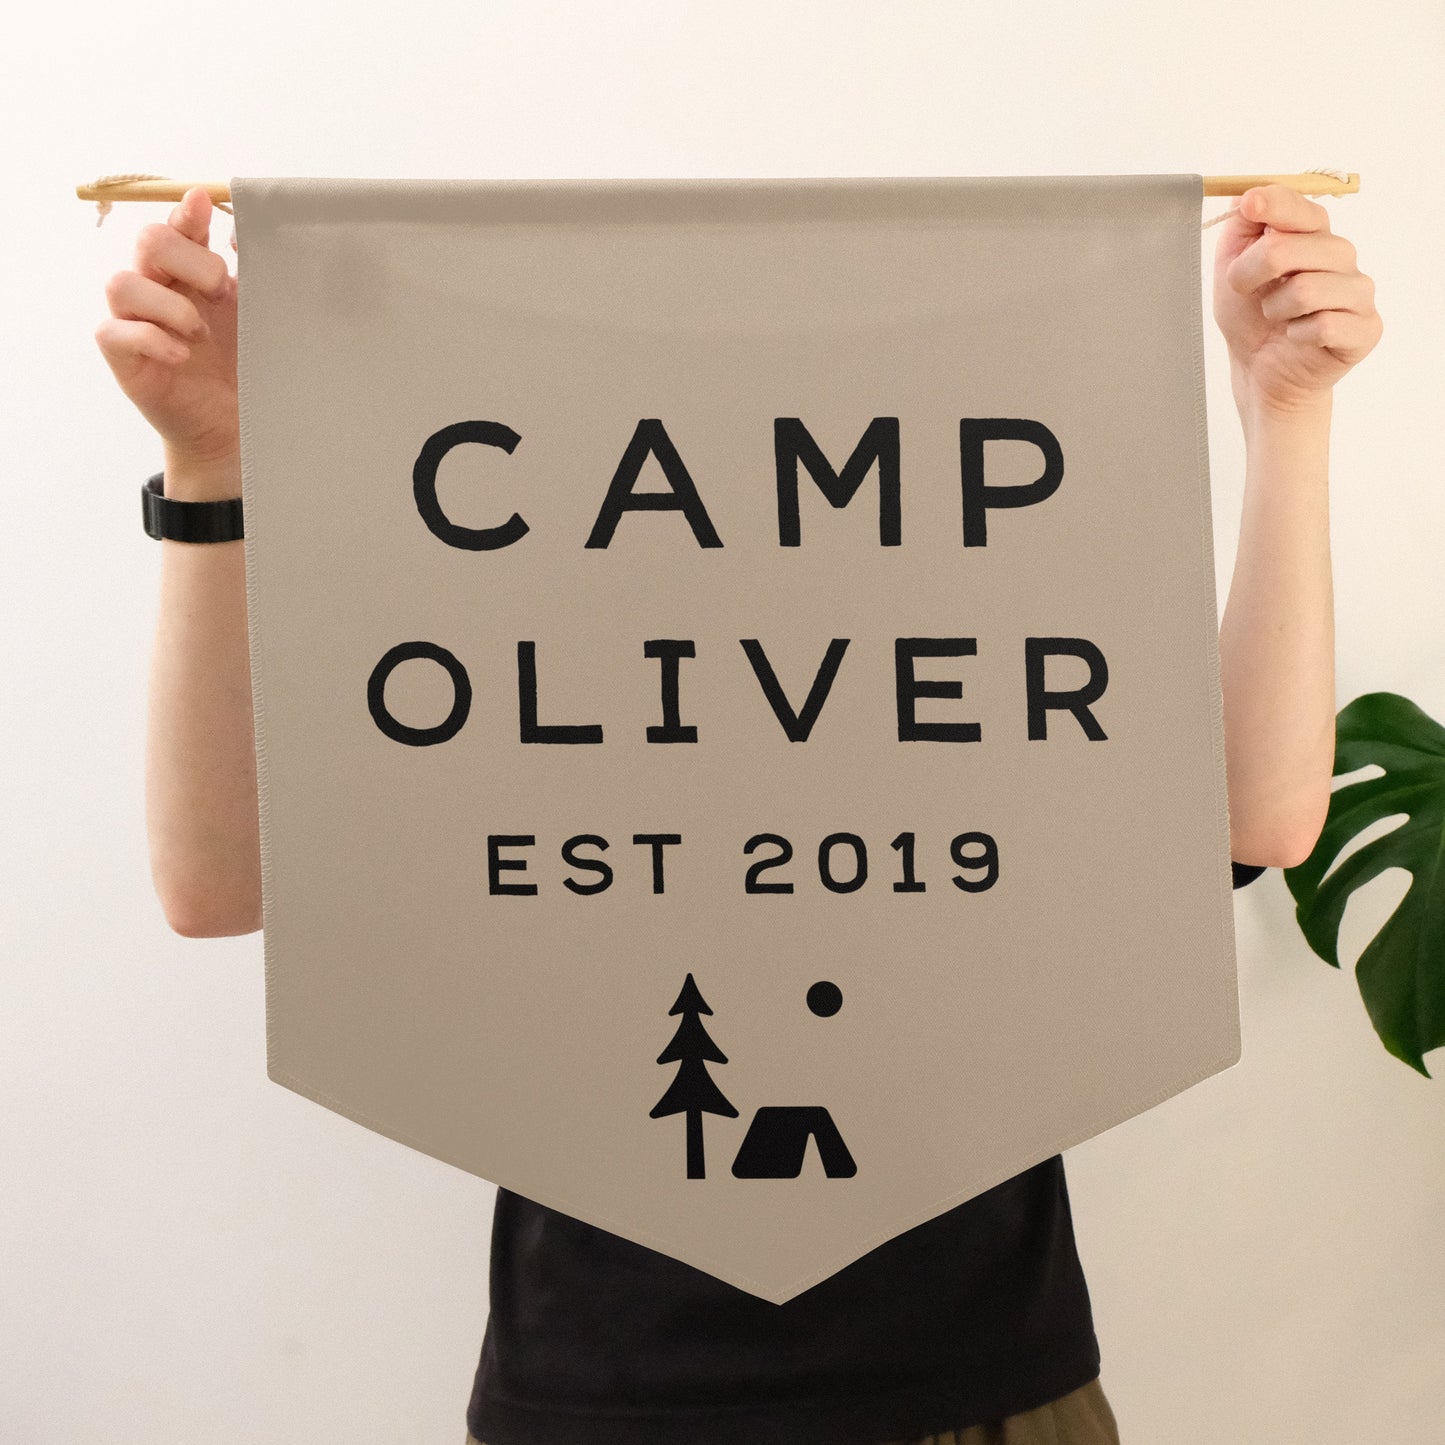 Custom Camp Banner